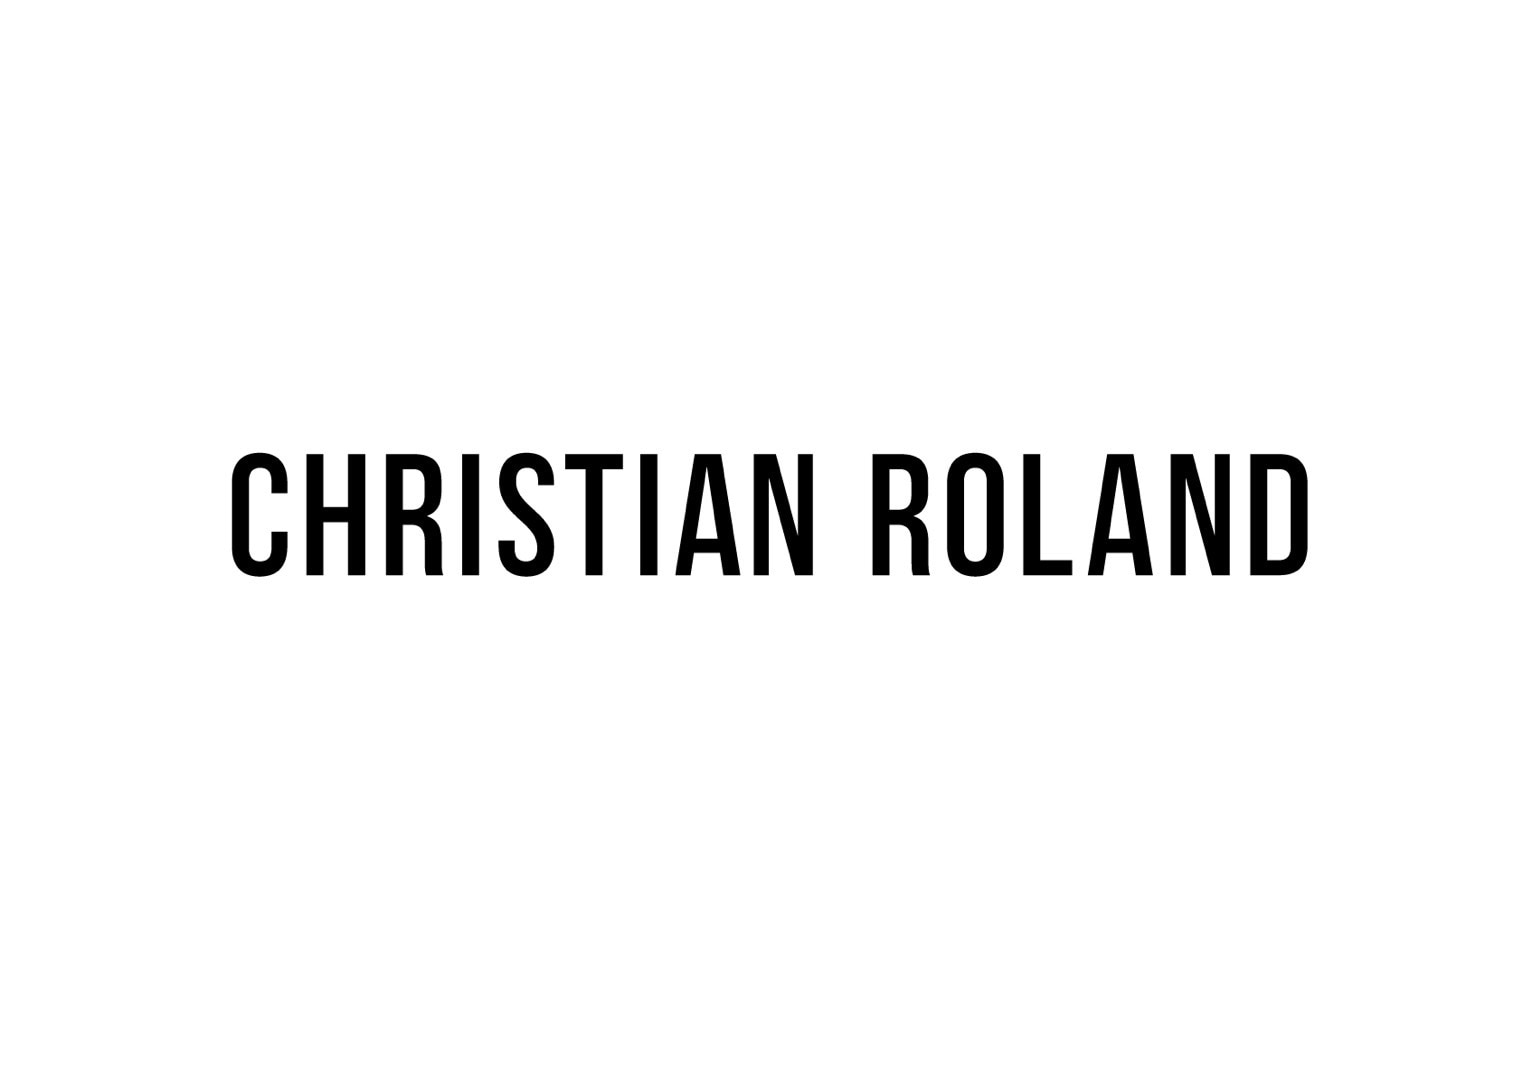 CHRISTIAN ROLAND